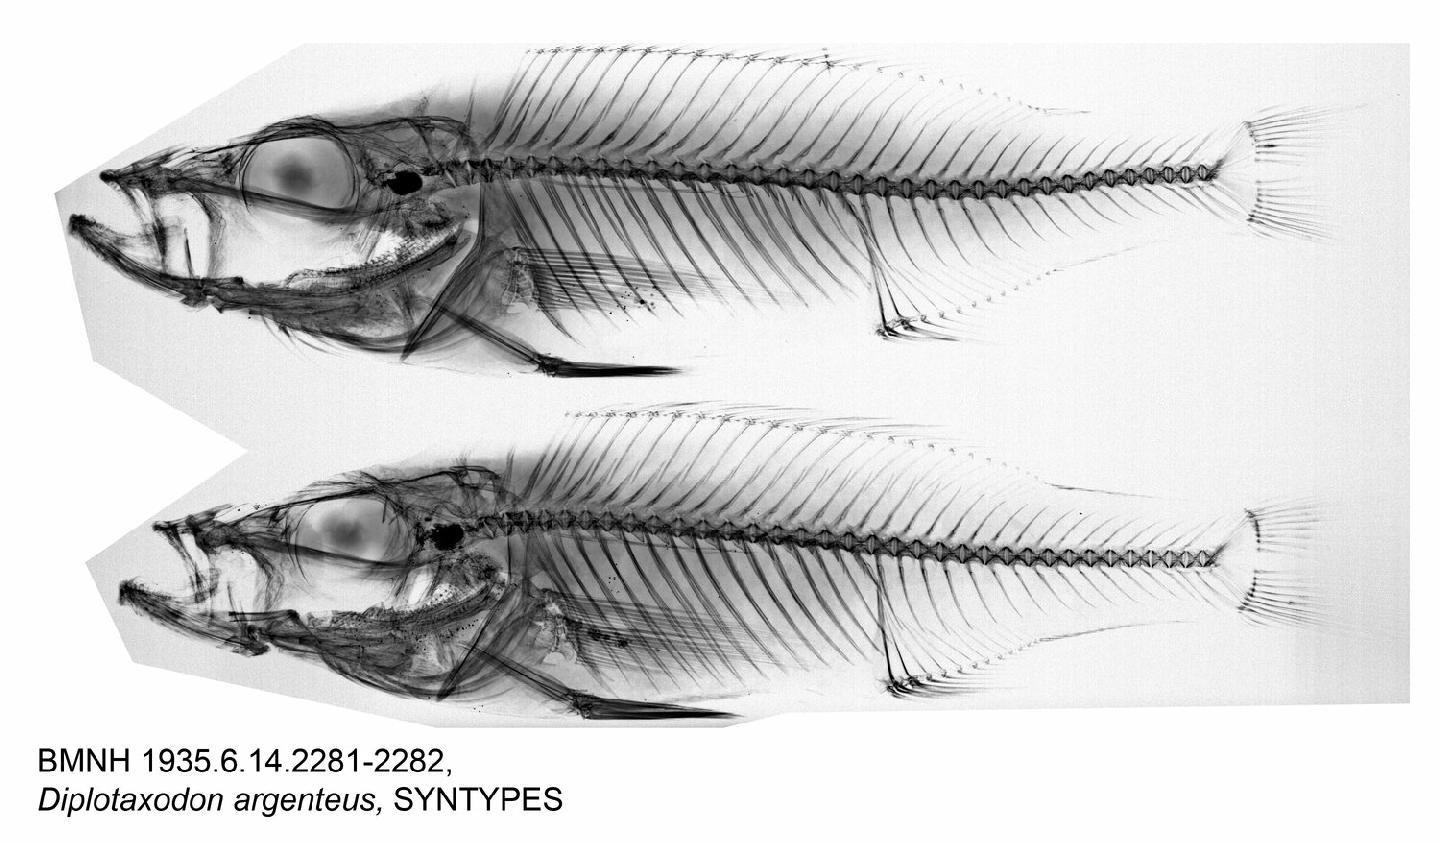 To NHMUK collection (Diplotaxodon argenteus Trewavas, 1935; LECTOTYPE; NHMUK:ecatalogue:8167337)